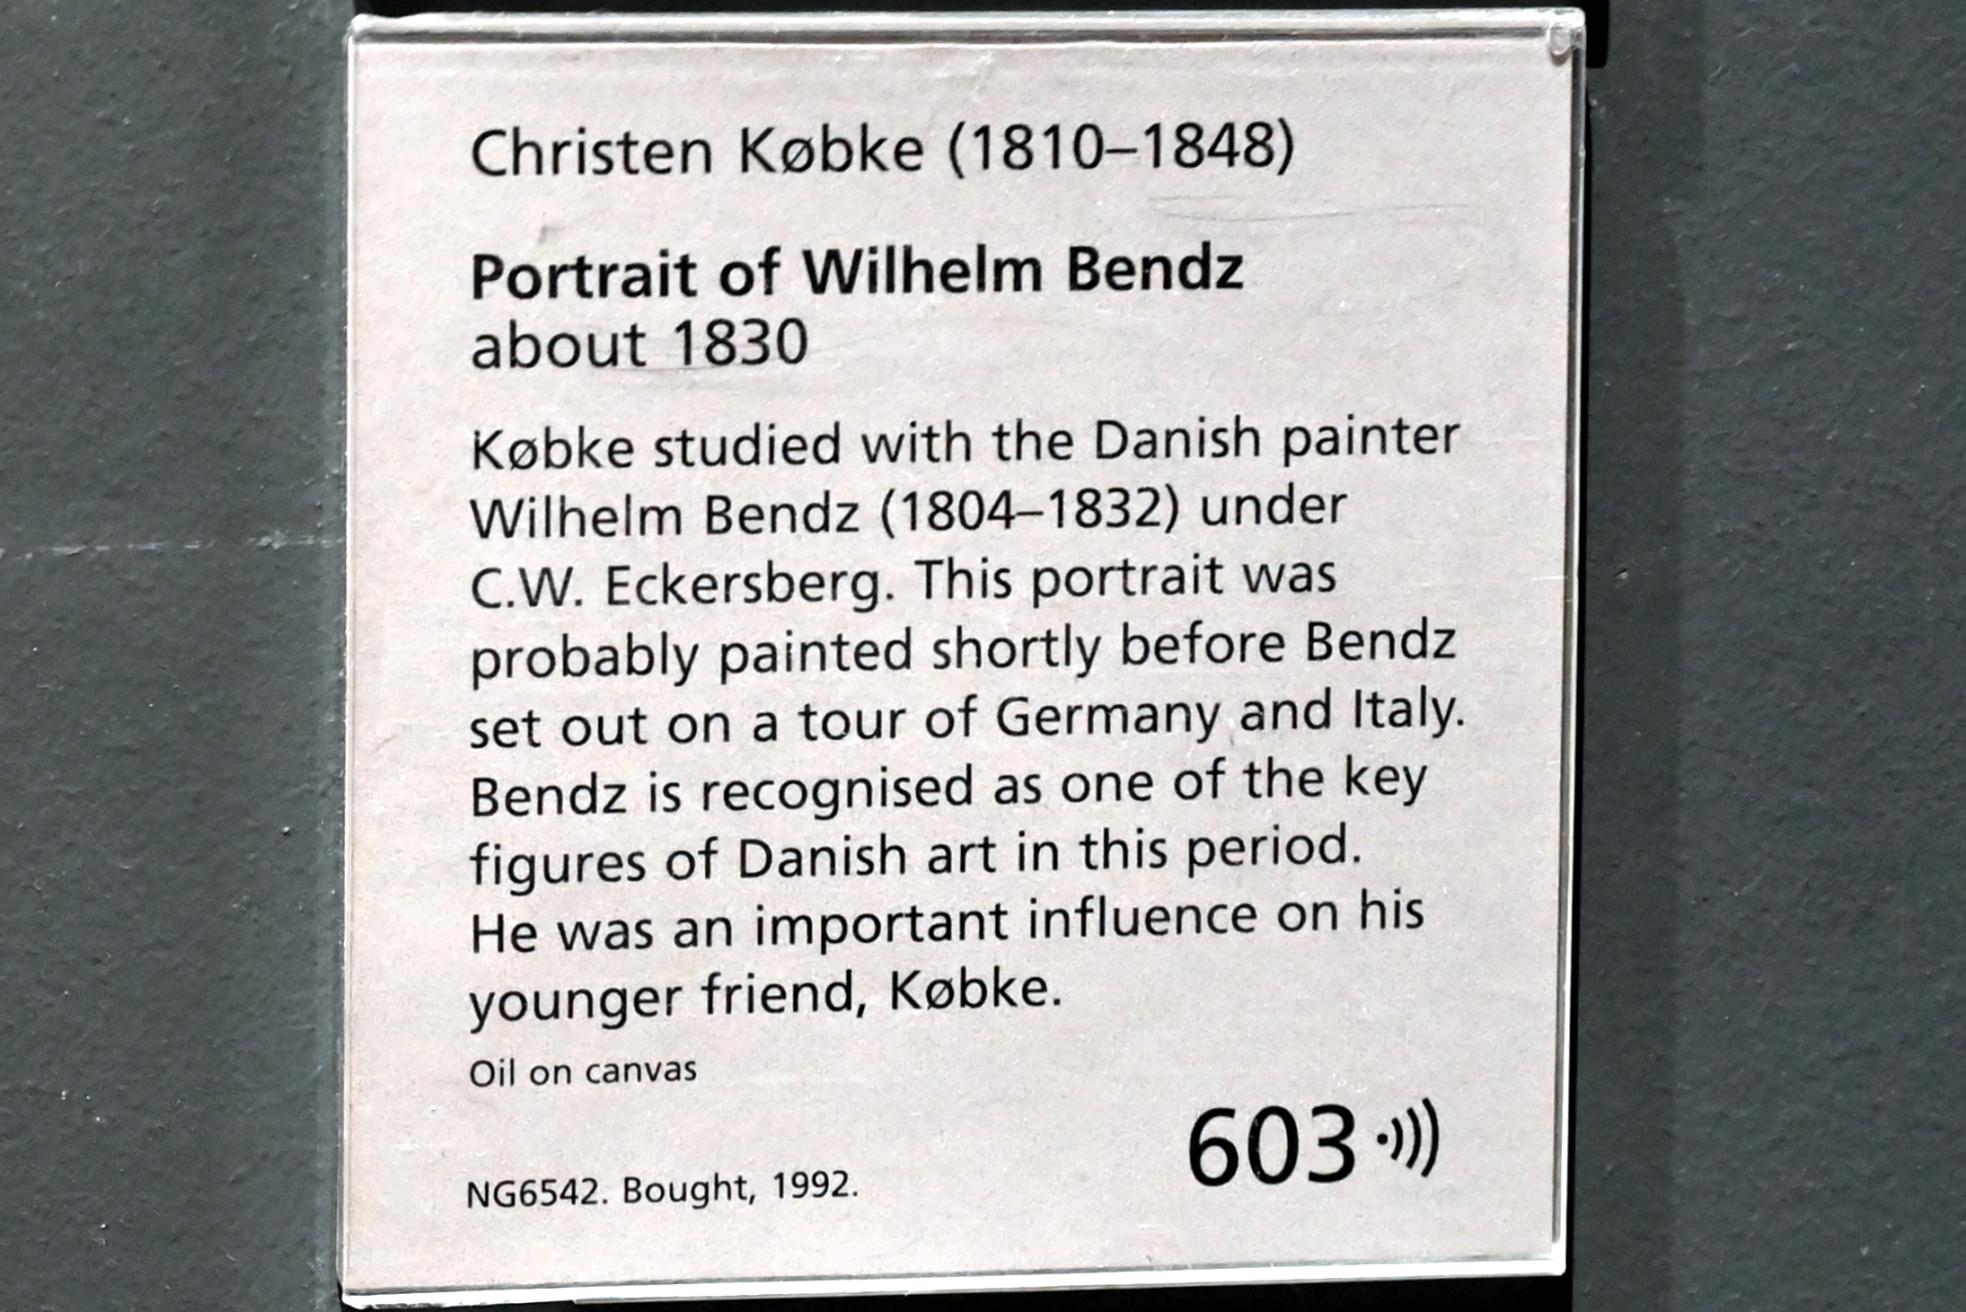 Christen Købke (1830–1848), Porträt des Wilhelm Bendz, London, National Gallery, Saal 45, um 1830, Bild 2/2